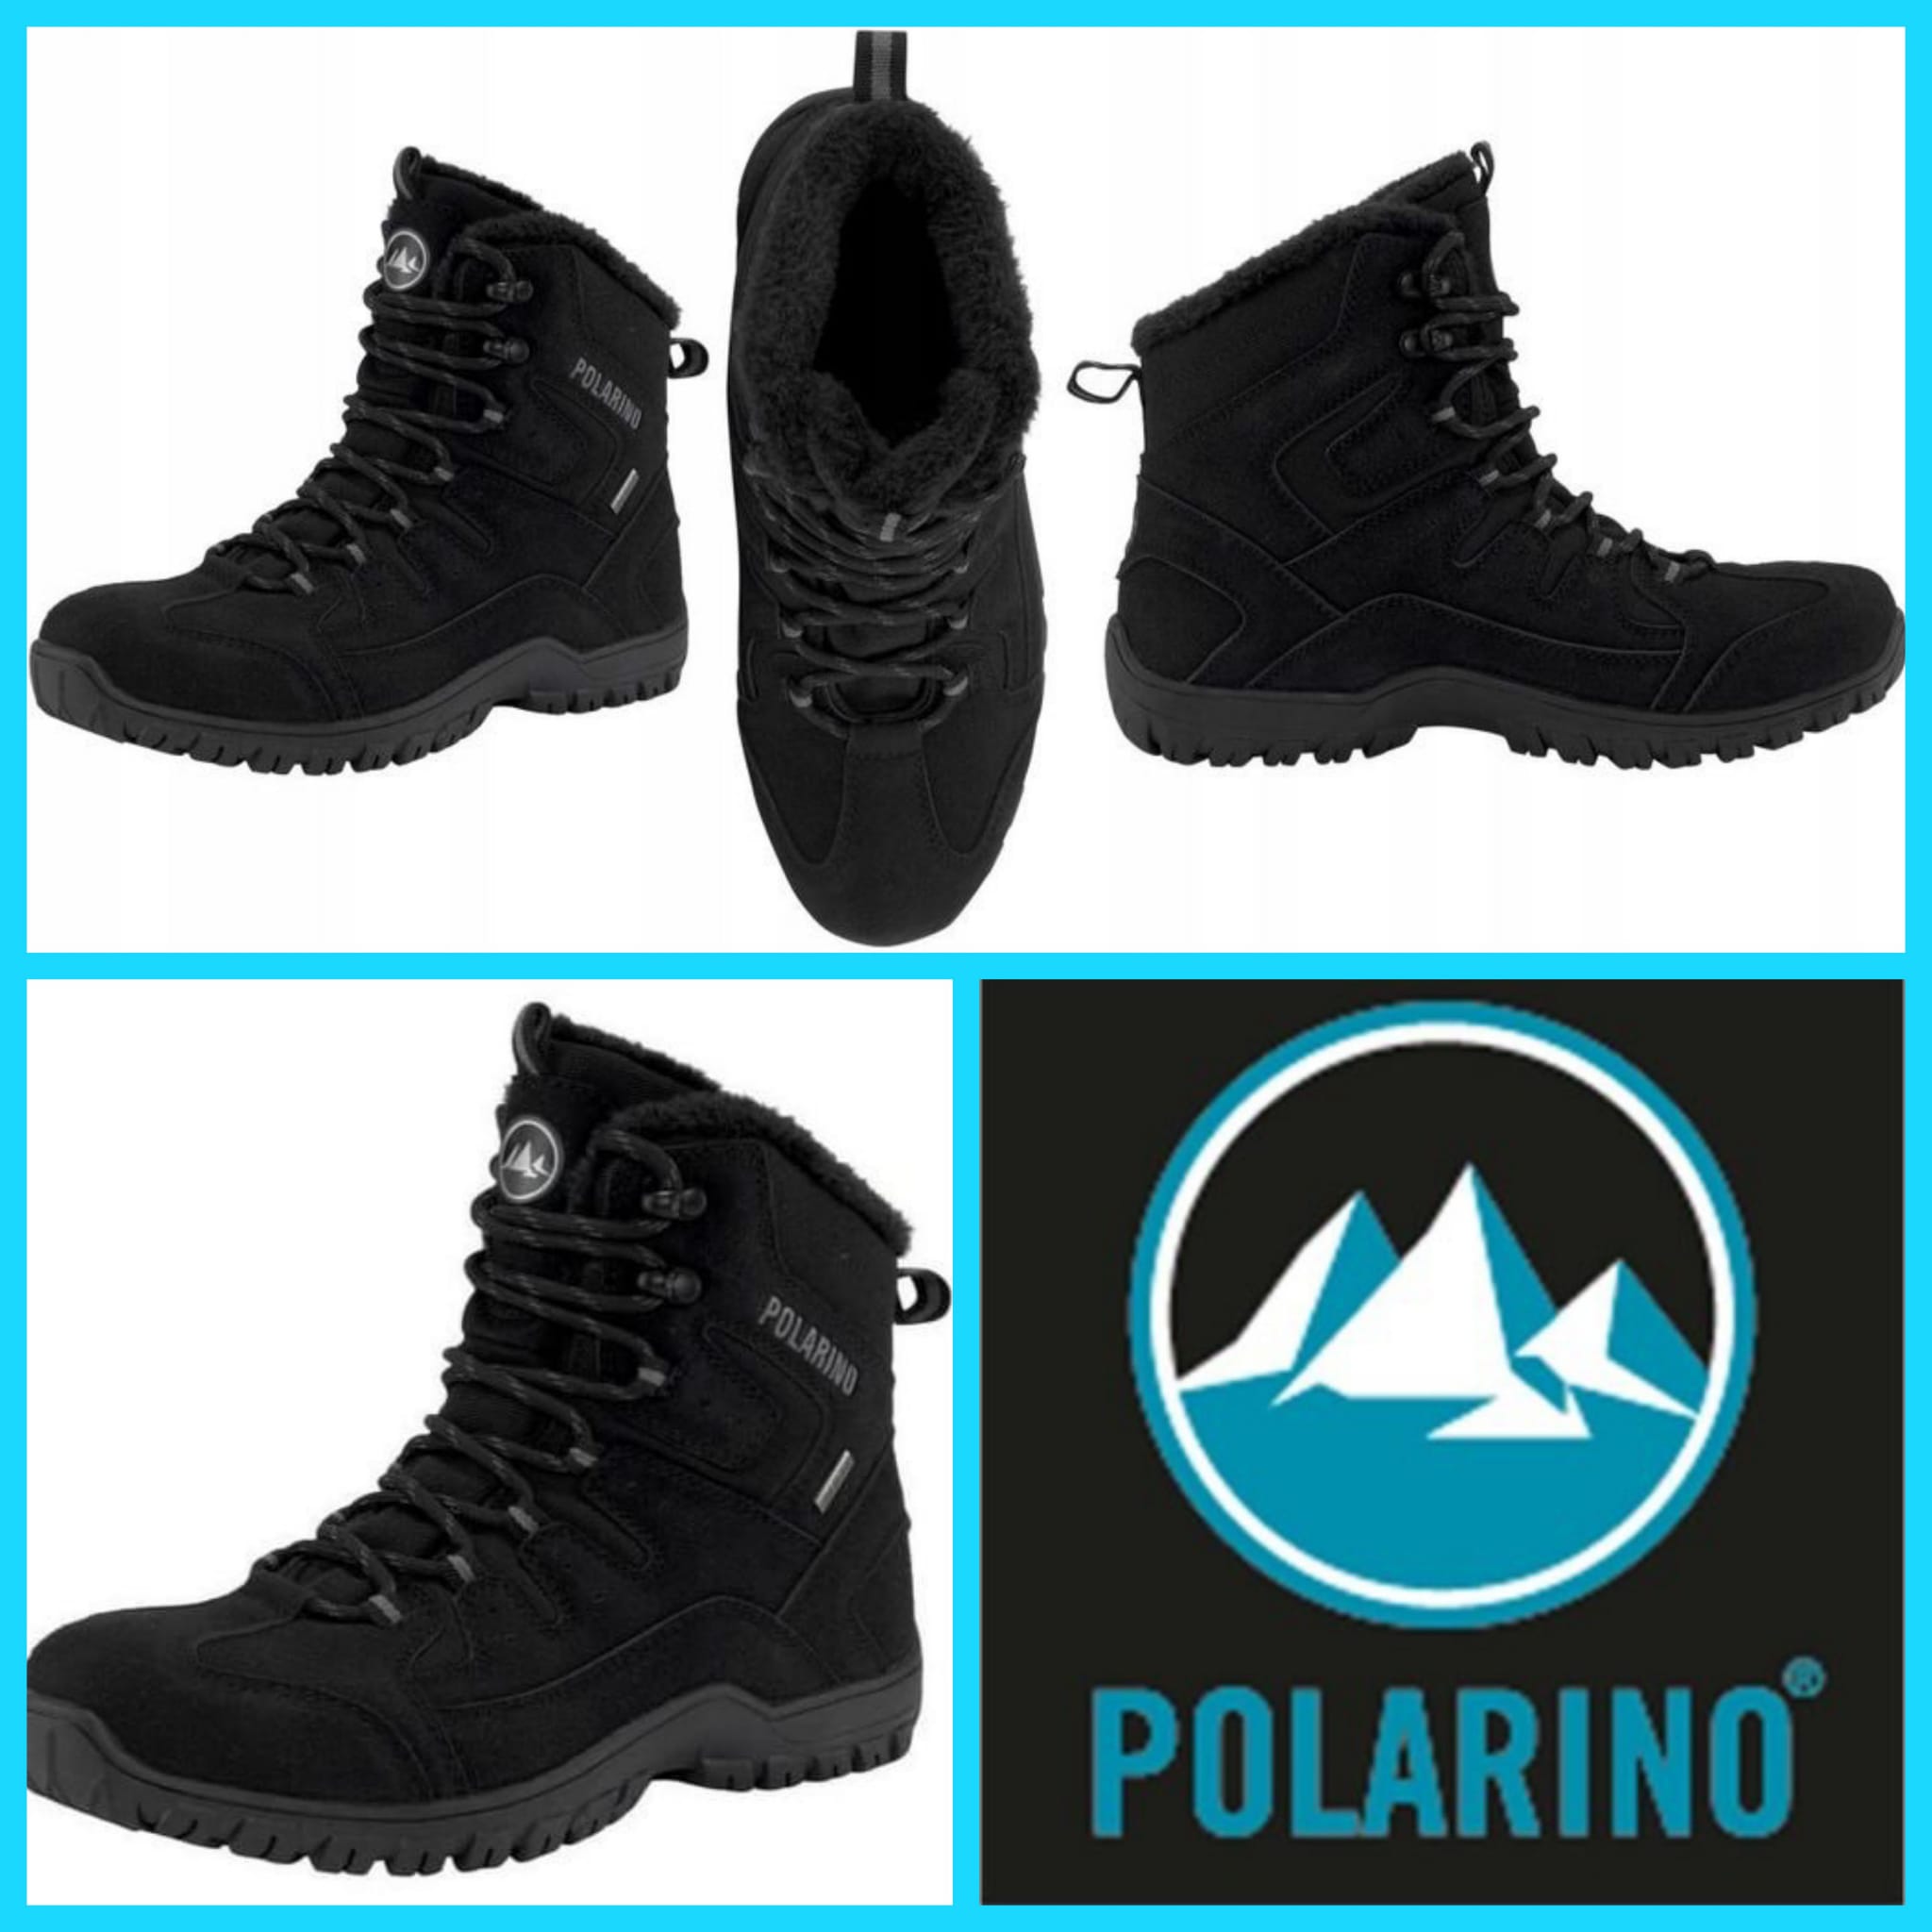 Winter boots by Polarino